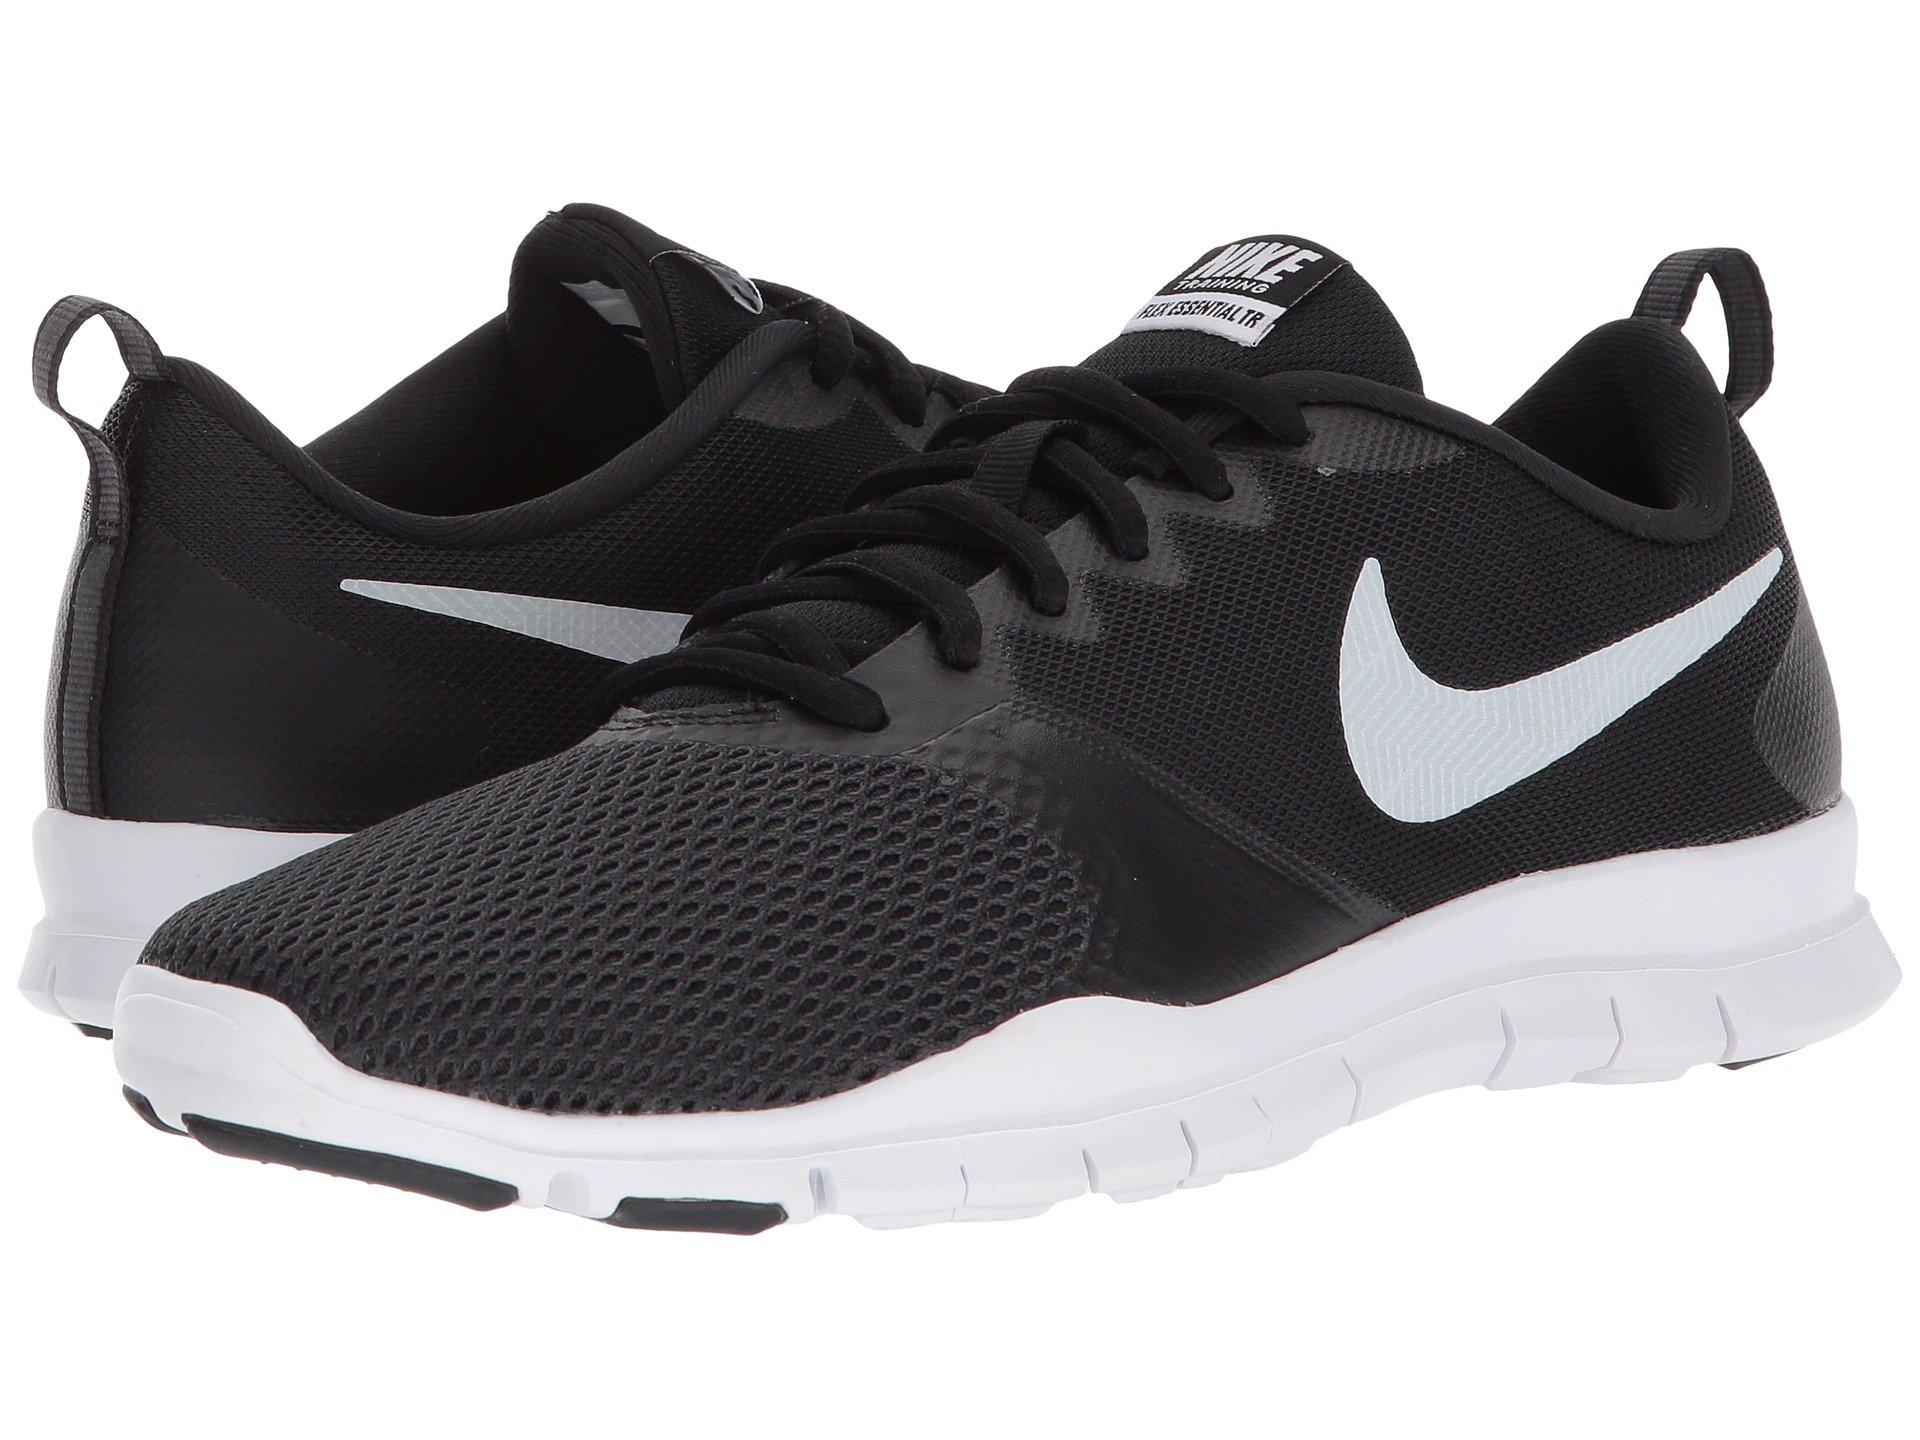 Nike Flex Essential Tr Training Shoe in Black/White (Black) - Lyst